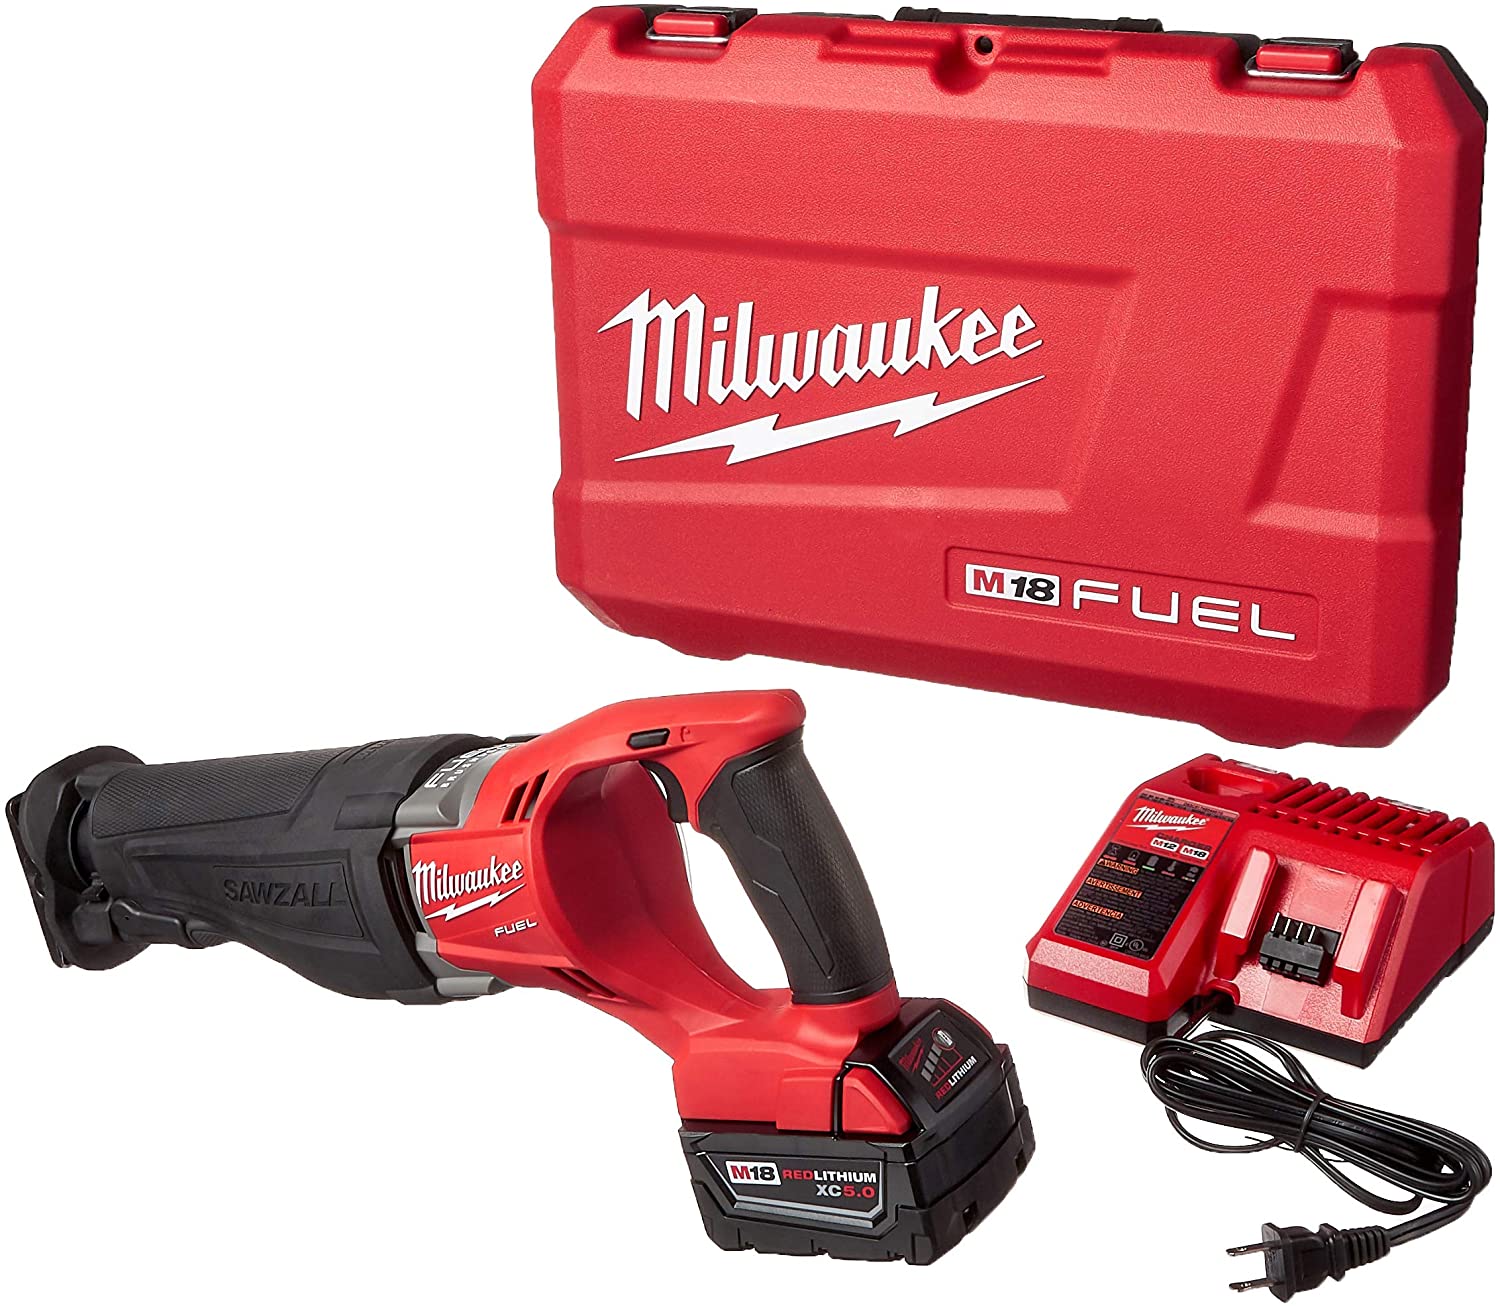 Milwaukee 272021 M18 Fuel Sawzall Reciprocating Saw Kit